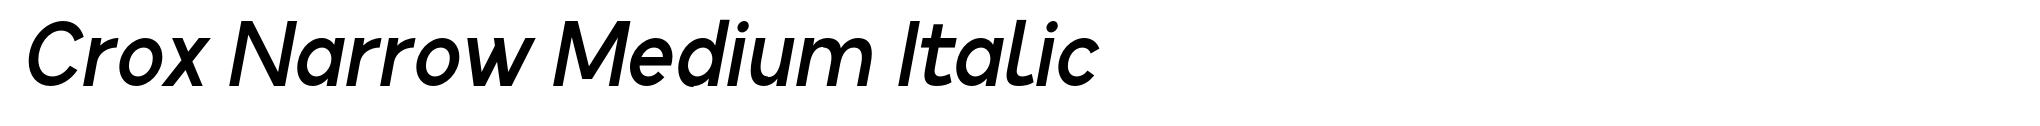 Crox Narrow Medium Italic image